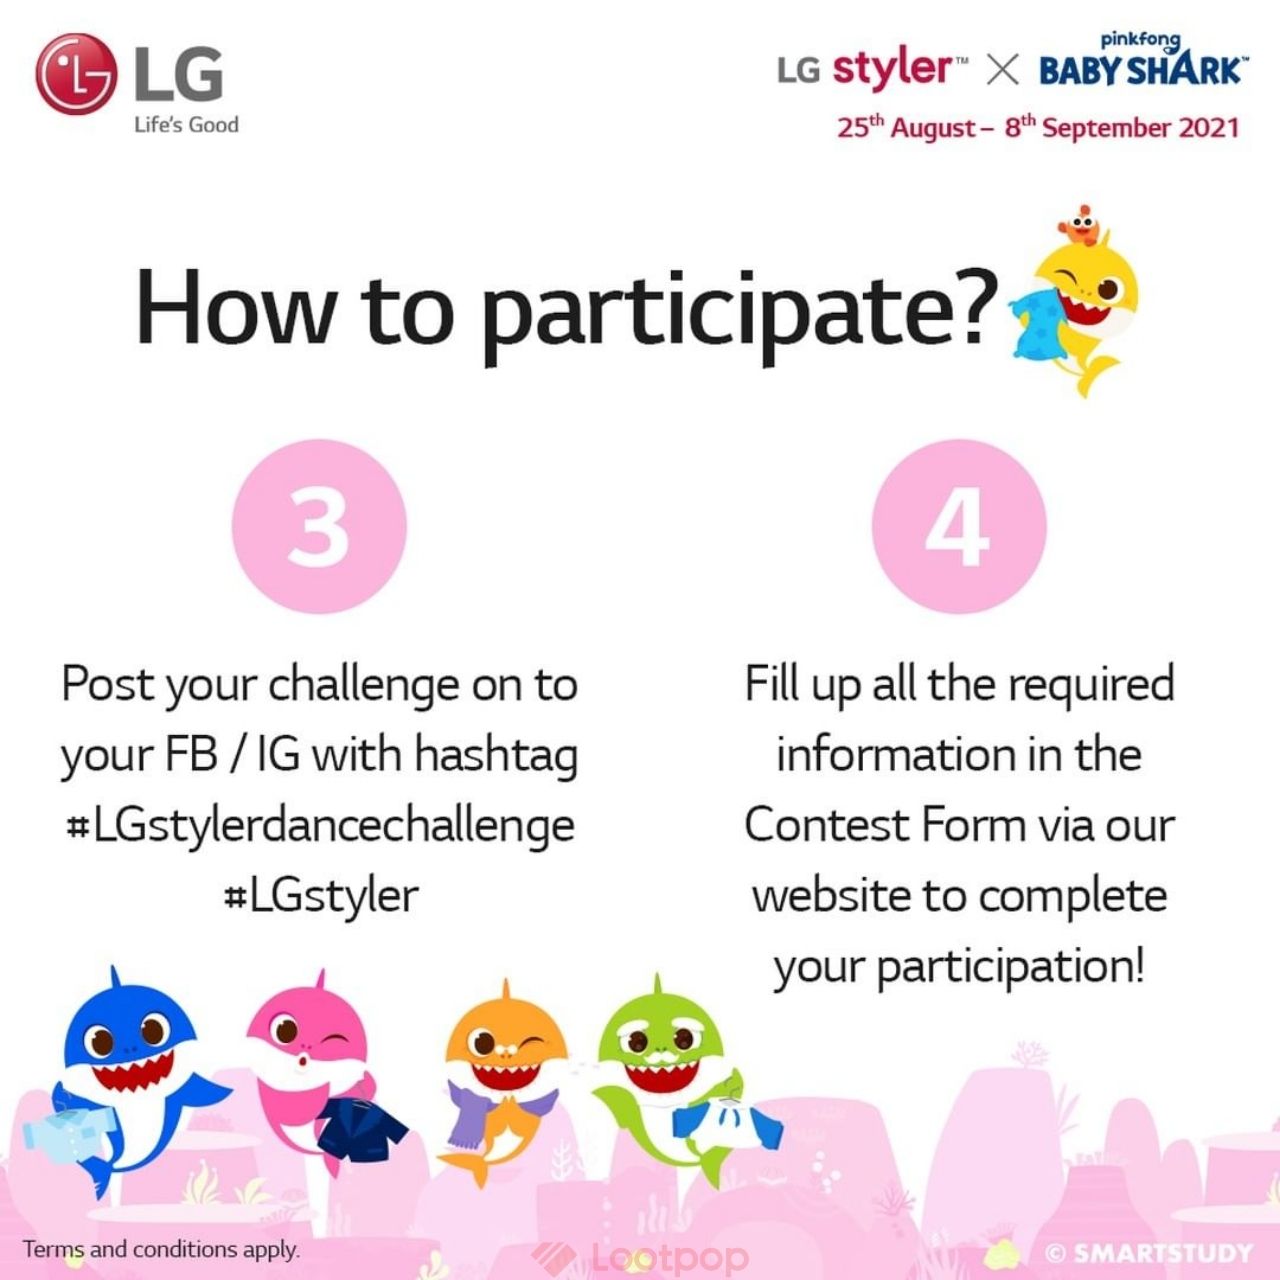 LG Styler™ X Pinkfong Baby Shark Dance Challenge